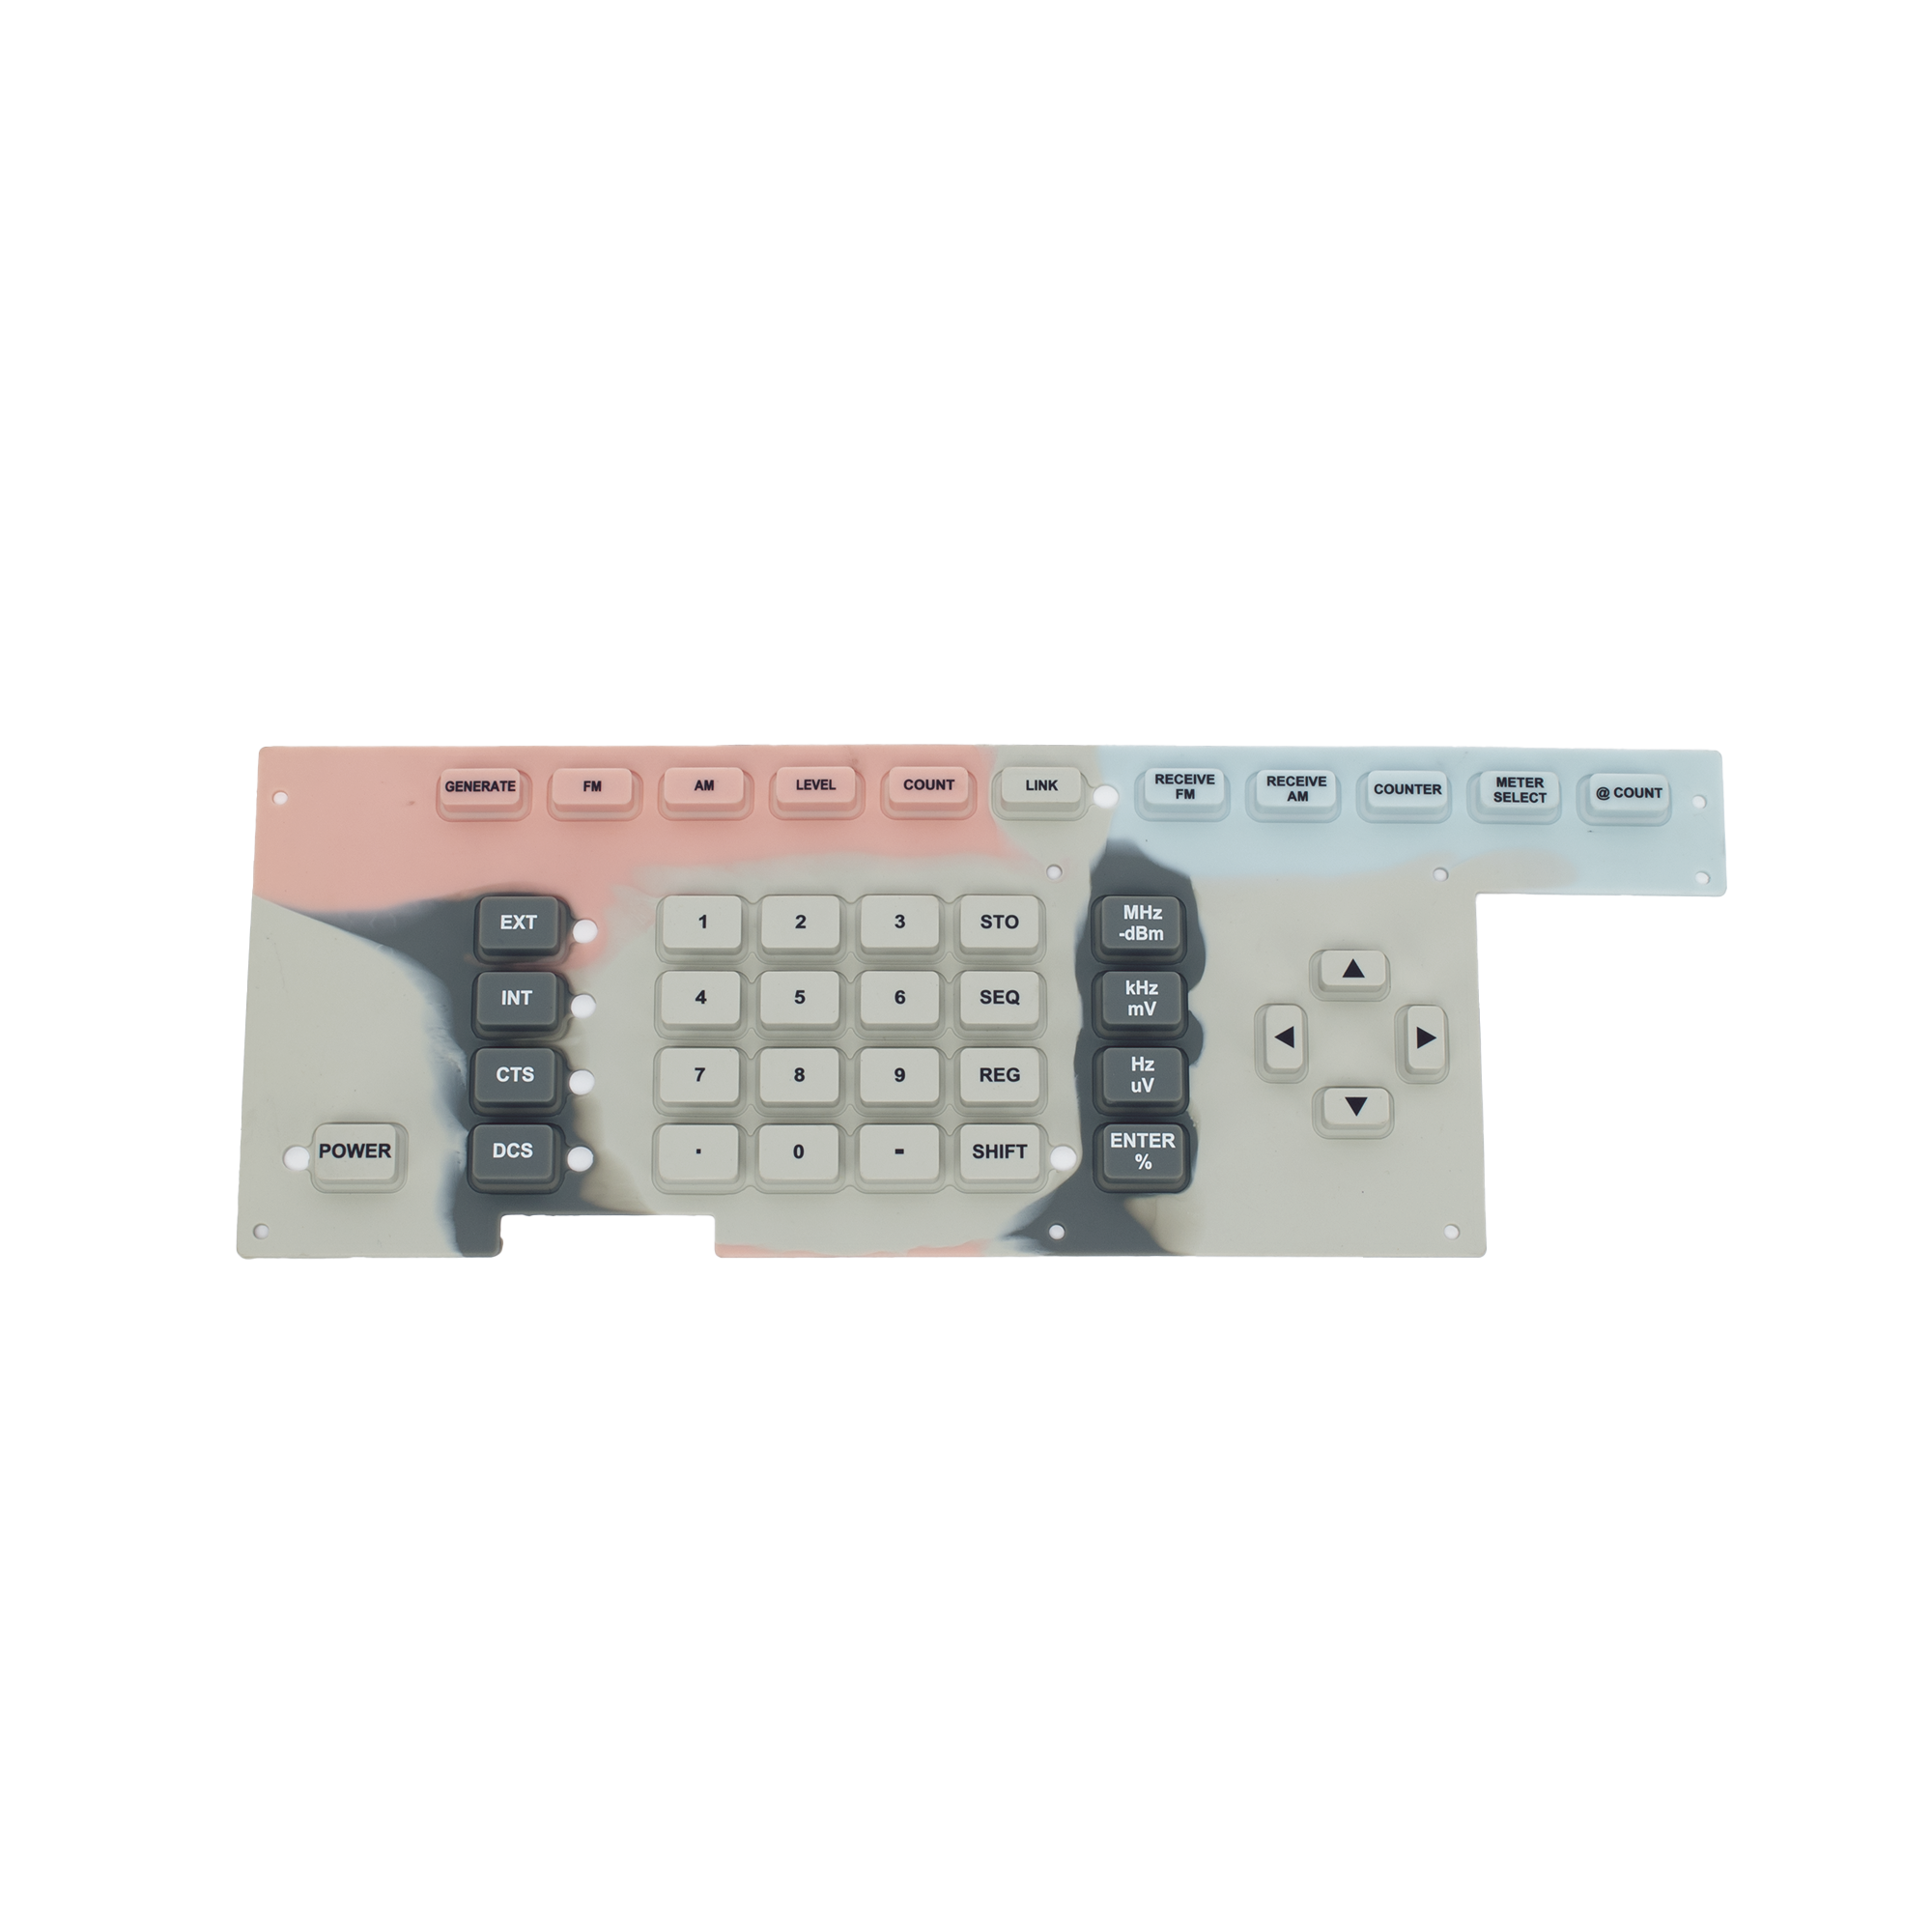 Membrana Elastomérica "Touch Pad" para Monitor de Servicio Ramsey COM-3010.